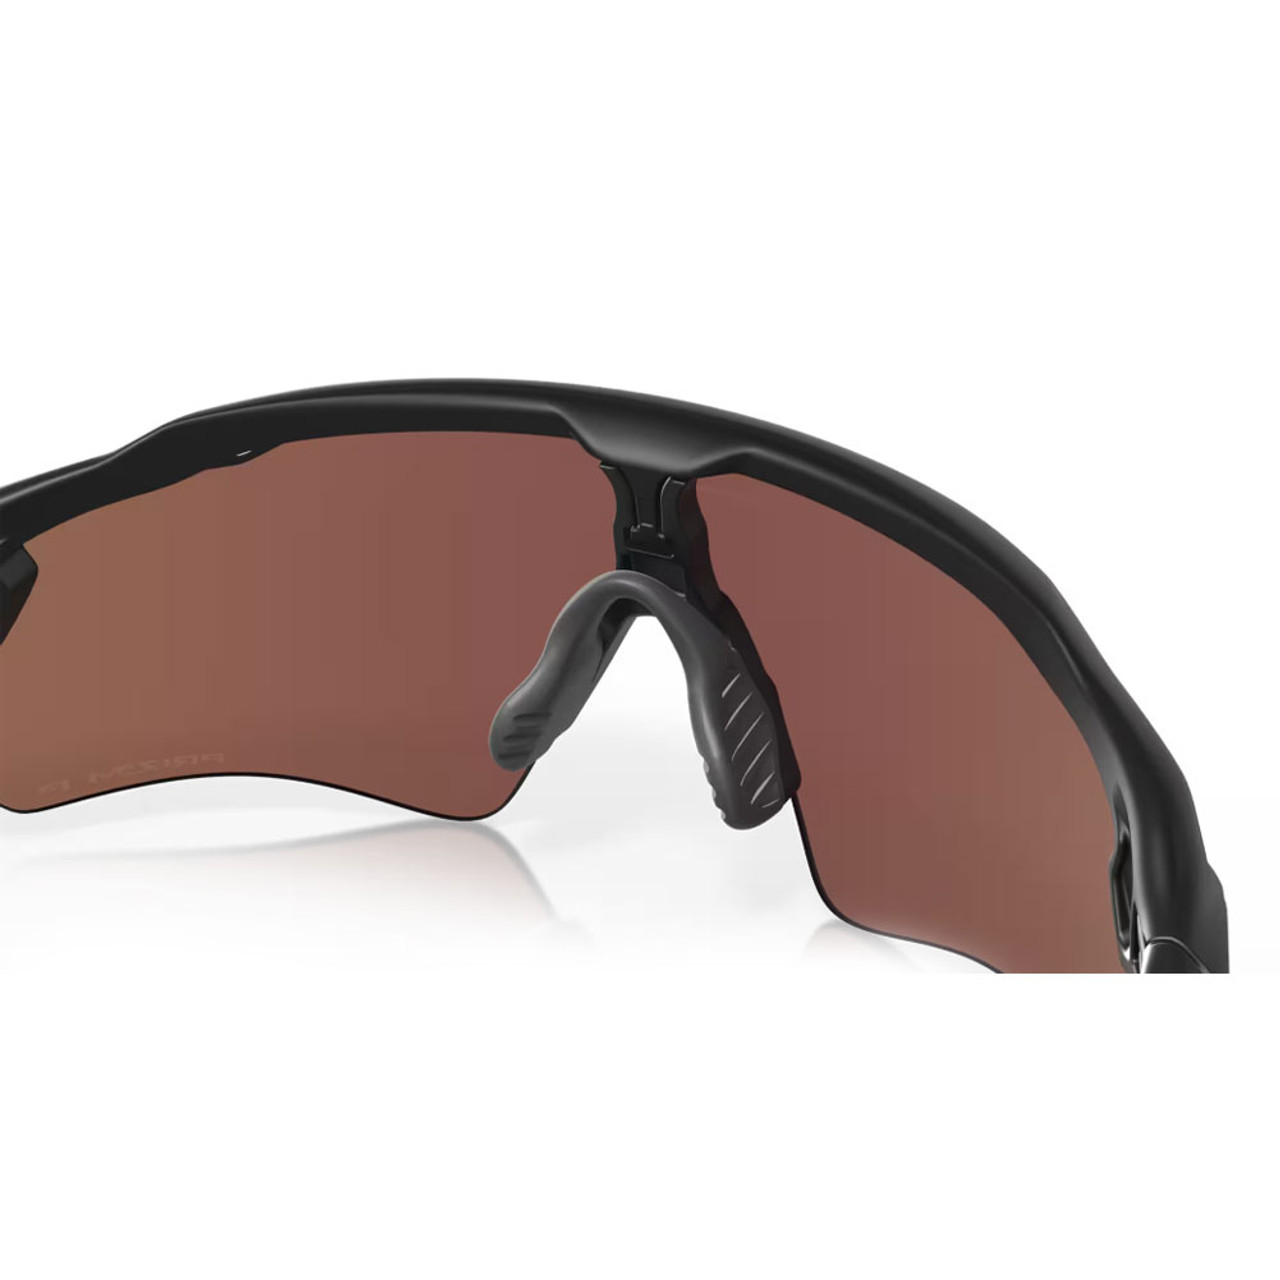 OAKLEY Radar EV Path Sunglasses with Matte Black Frame and Prizm 